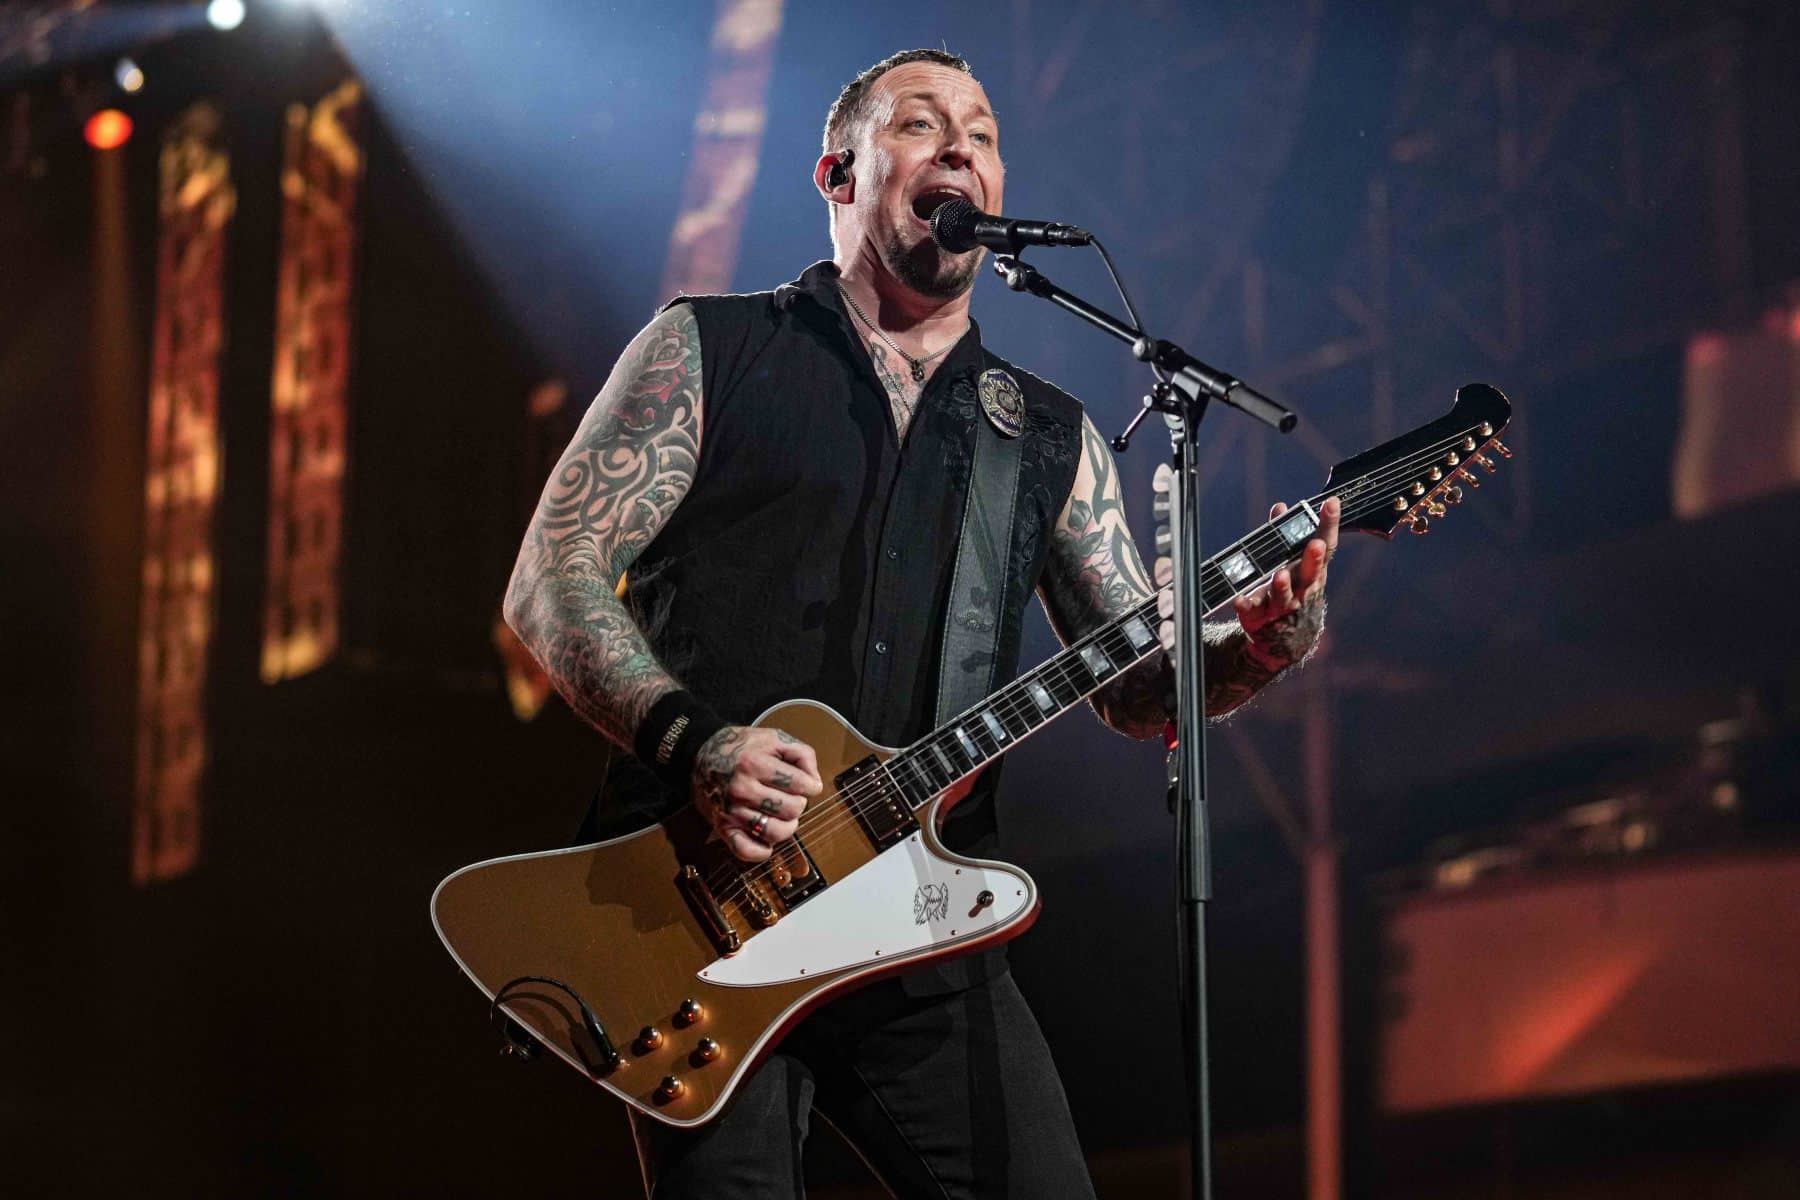 29.11.2022 Volbeat mit Ihrer Servant Of The Road World Tour in der Festhalle Frankfurt. Special Guests: Skindred und Bad Wolves